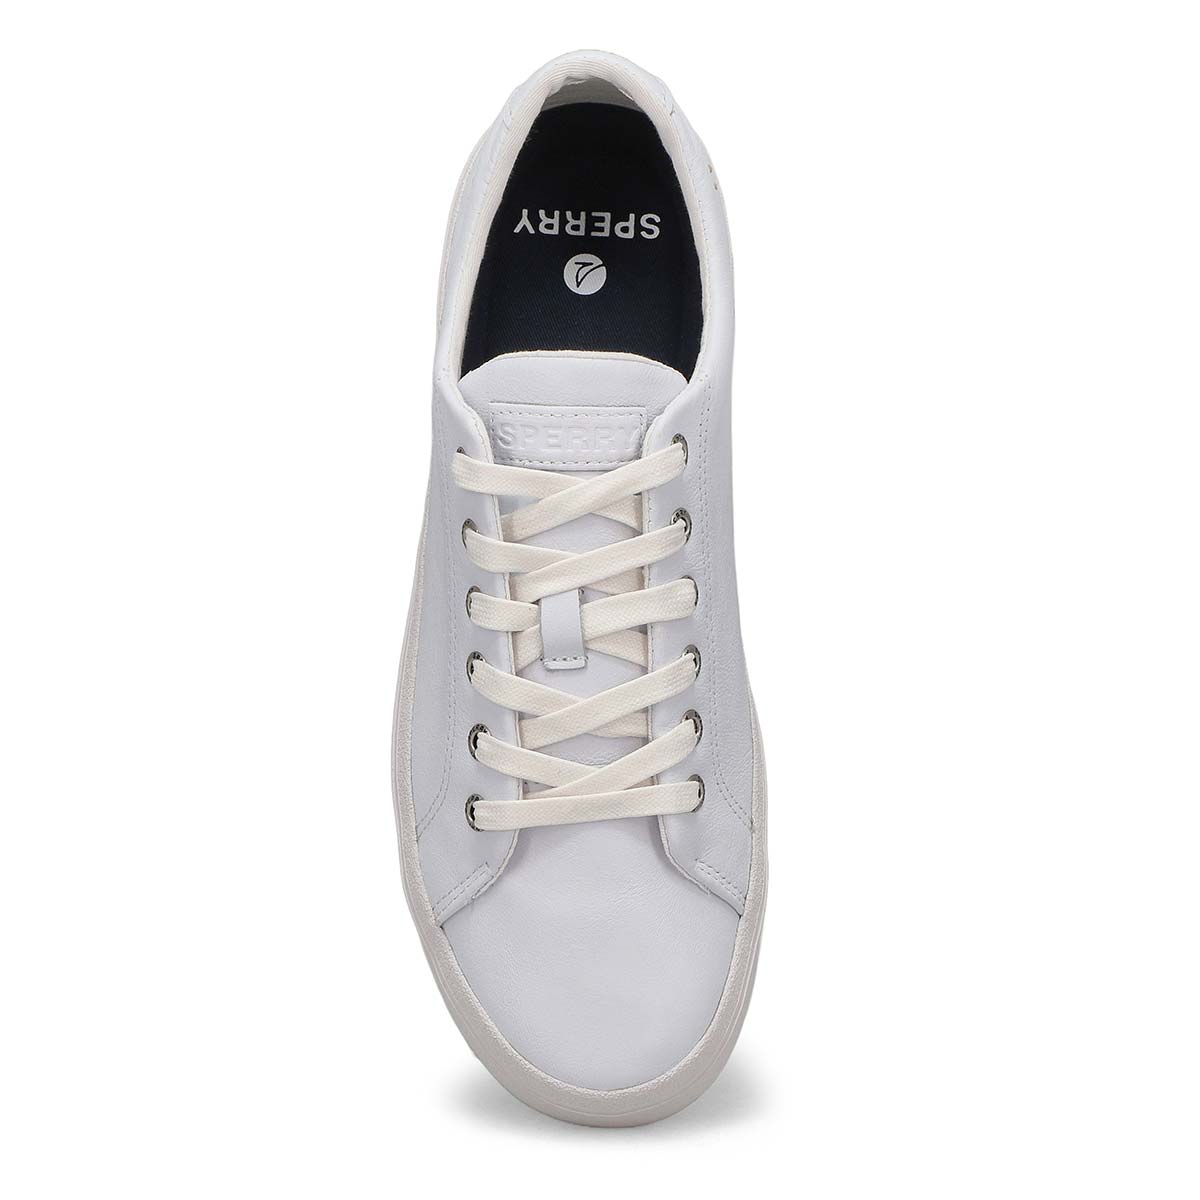 Mens Striper II LTT Leather Sneaker - White